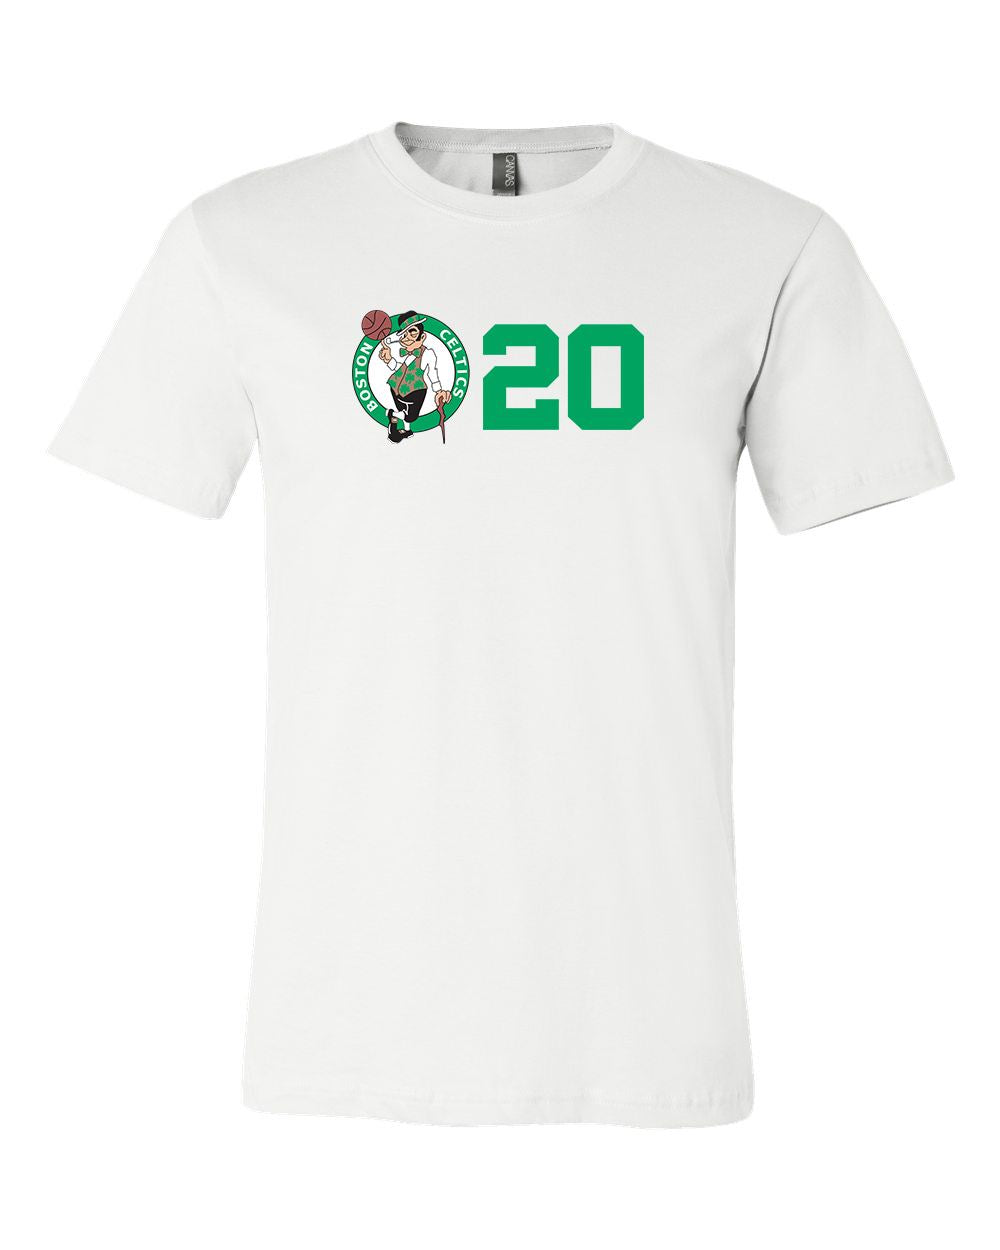 Gordon Hayward #20 Boston Celtics jersey Team Shirt 6 S-3XL Sportz For Less